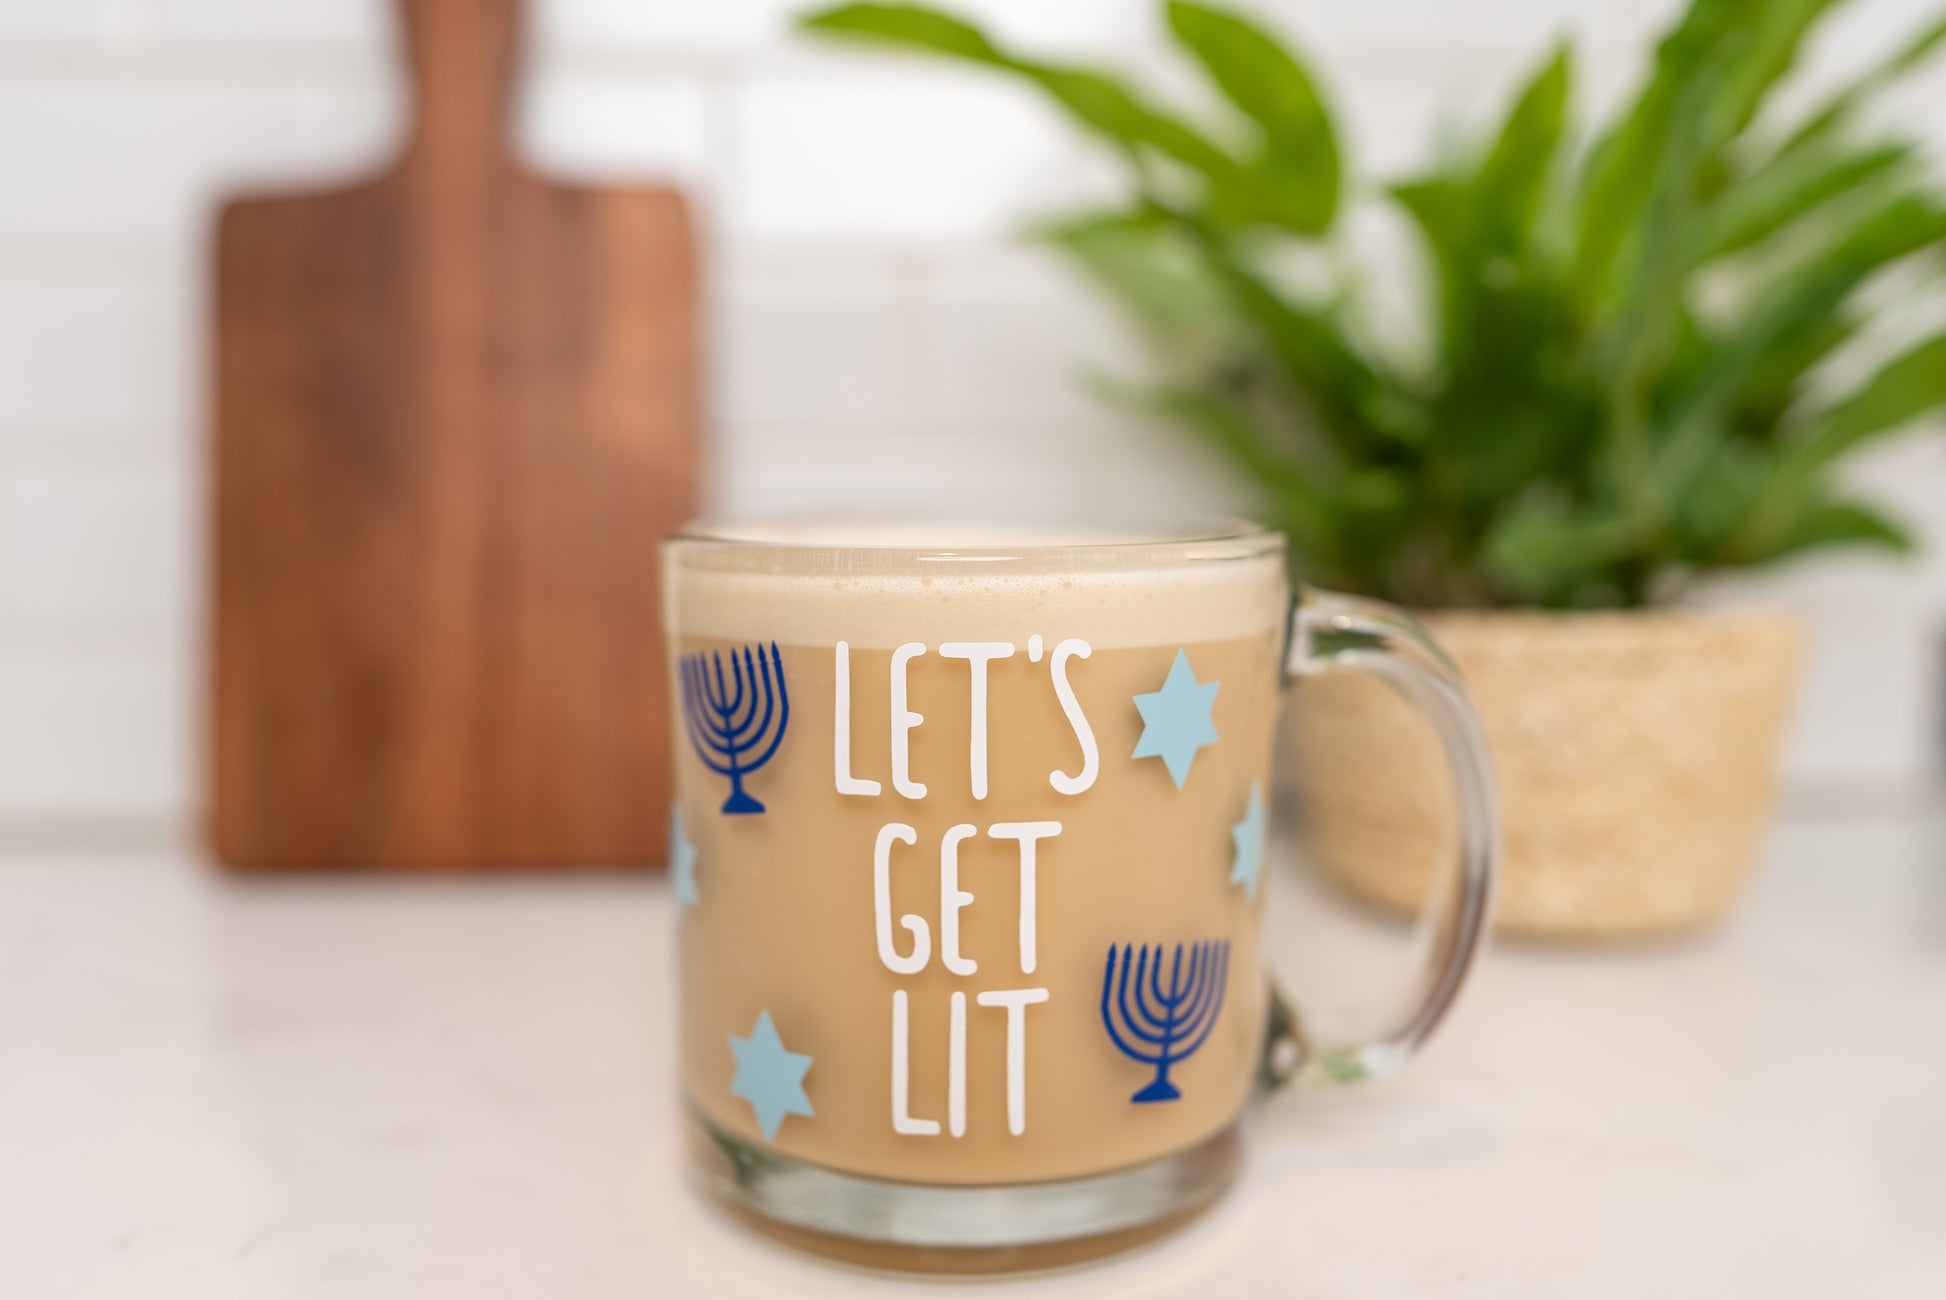 Let's Get Lit Hanukkah Mug, Hanukkah Coffee Mug, Hanukkah Coffee Cup, Glass Cup, Clear Glass Mug, Dreidel Dreidel Dreidel Mug, Gifts for Hanukkah, Chanukah Mug, Fun Coffee Mug, Jewish Holiday Decor